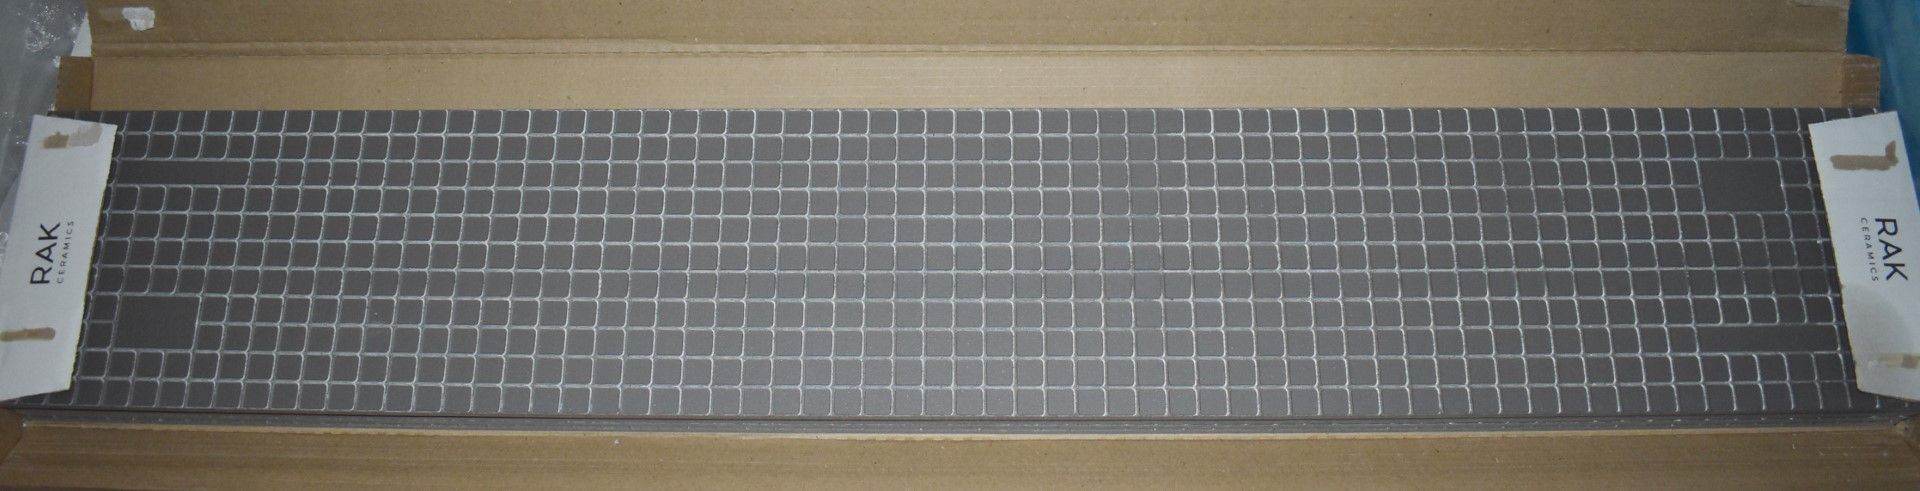 12 x Boxes of RAK Porcelain Floor or Wall Tiles - M Project Wood Design in Dark Grey - 19.5 x 120 cm - Image 5 of 8